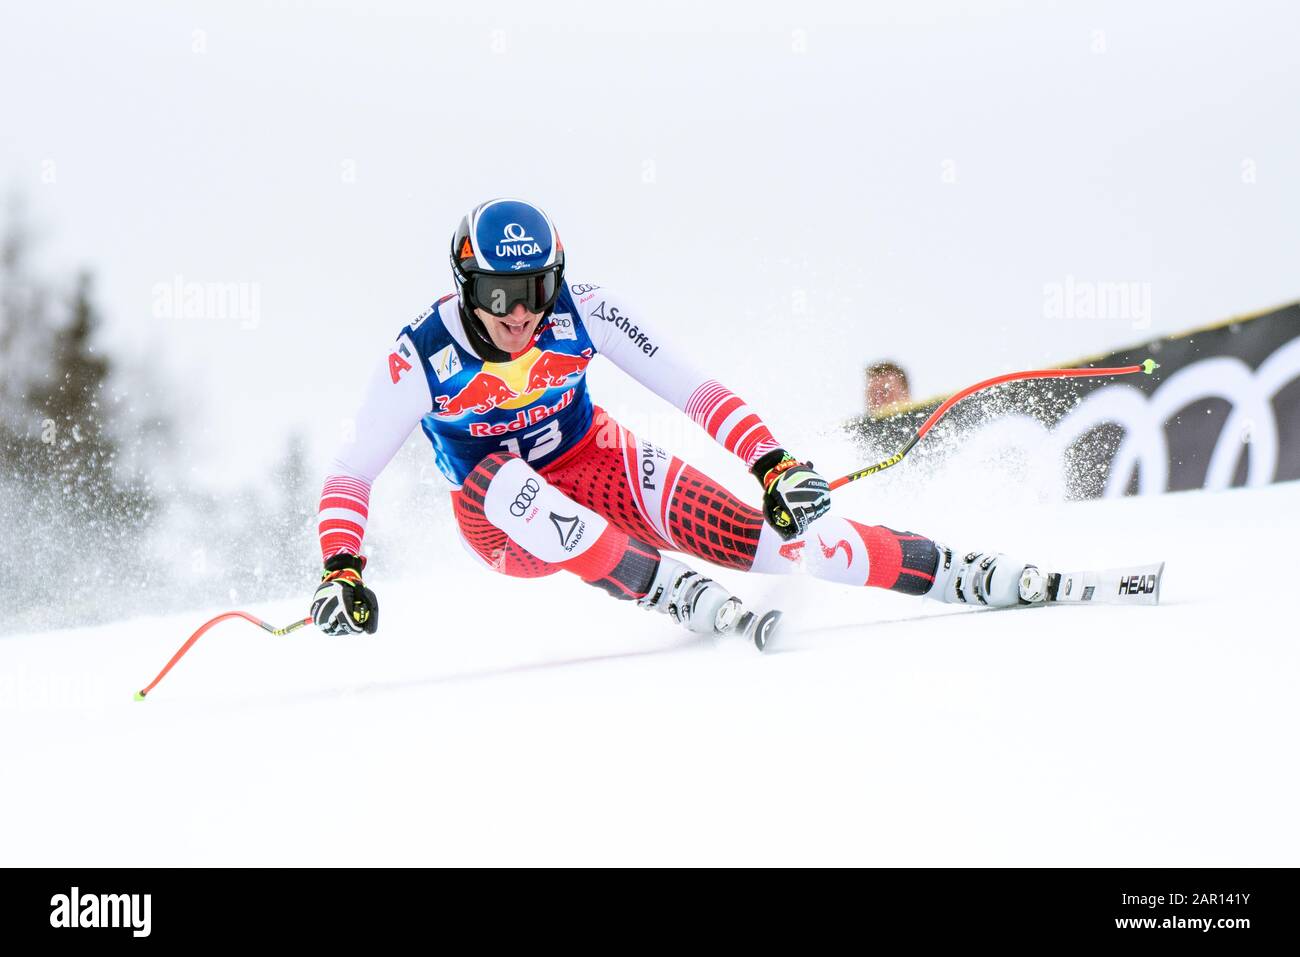 Kitzbuehel, Austria. 25th Jan 2020. Matthias Mayer of Austria at the Ski Alpin: 80. Hahnenkamm Race 2020 - Audi FIS Alpine Ski World Cup - Men's Downhill at the Streif on January 25, 2020 in Kitzbuehel, AUSTRIA. Stock Photo